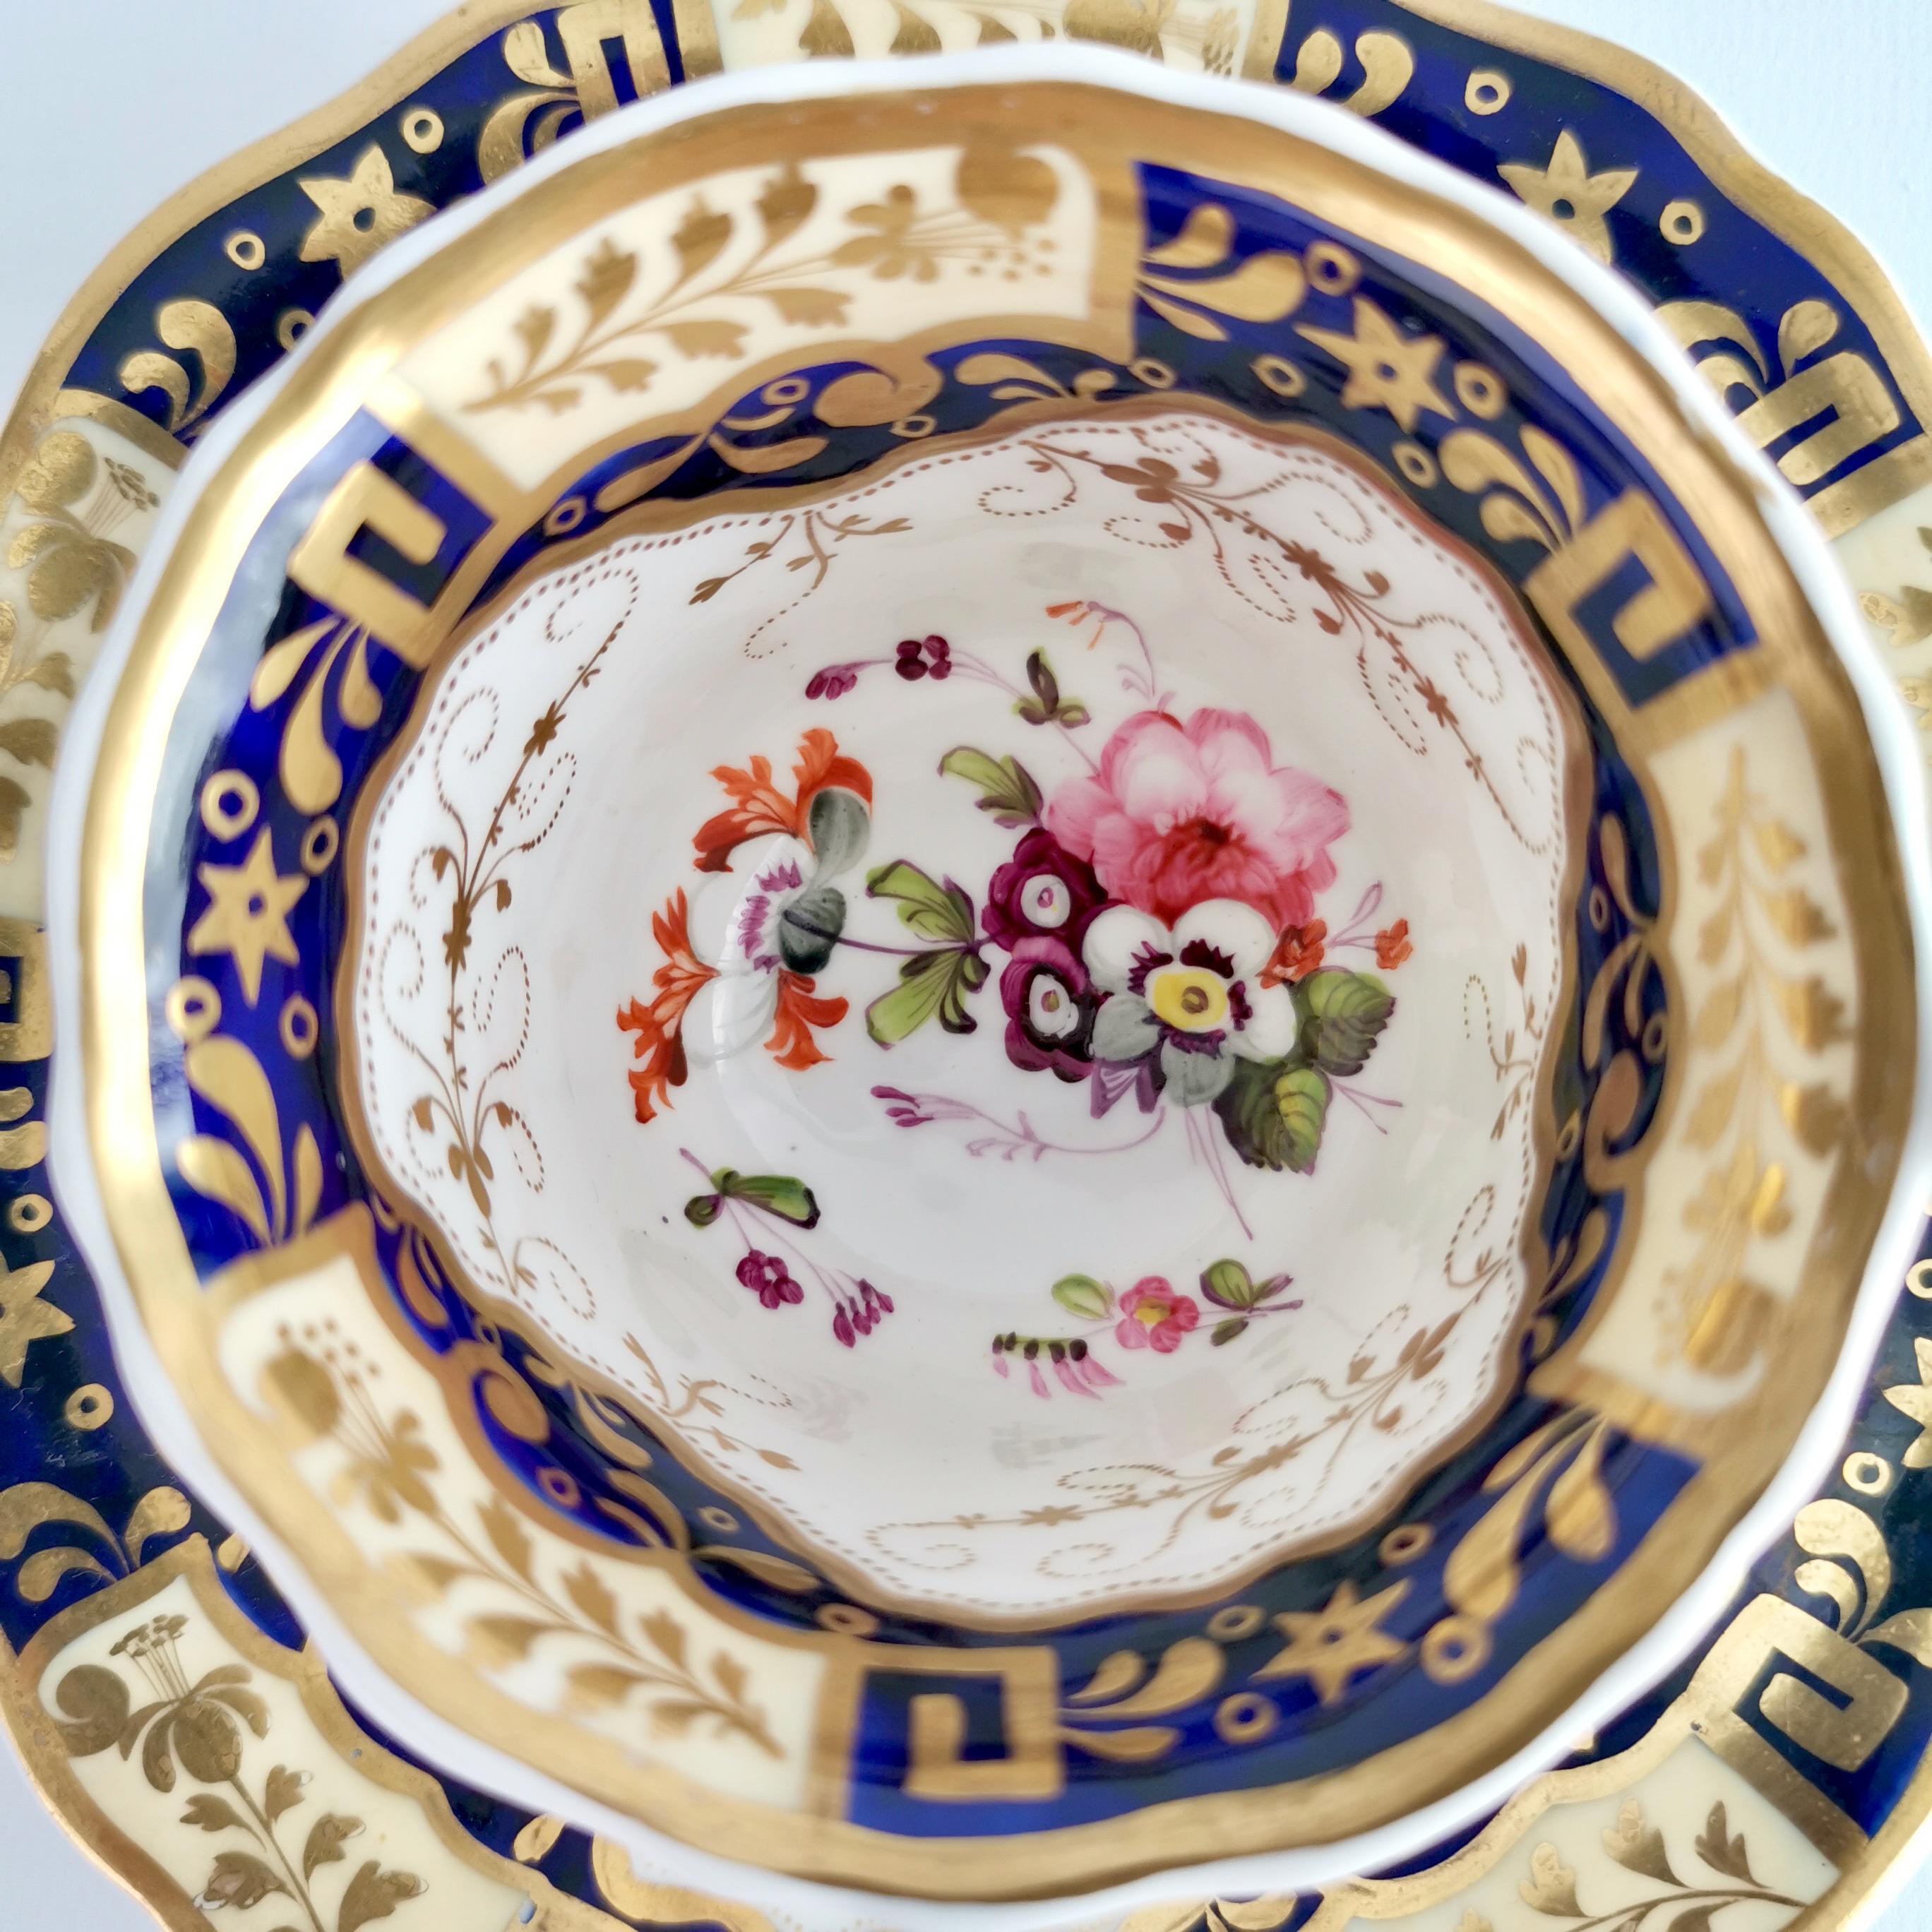 Yates Porcelain Teacup Trio, Cobalt Blue, Gilt and Flowers, Regency, ca 1825 5